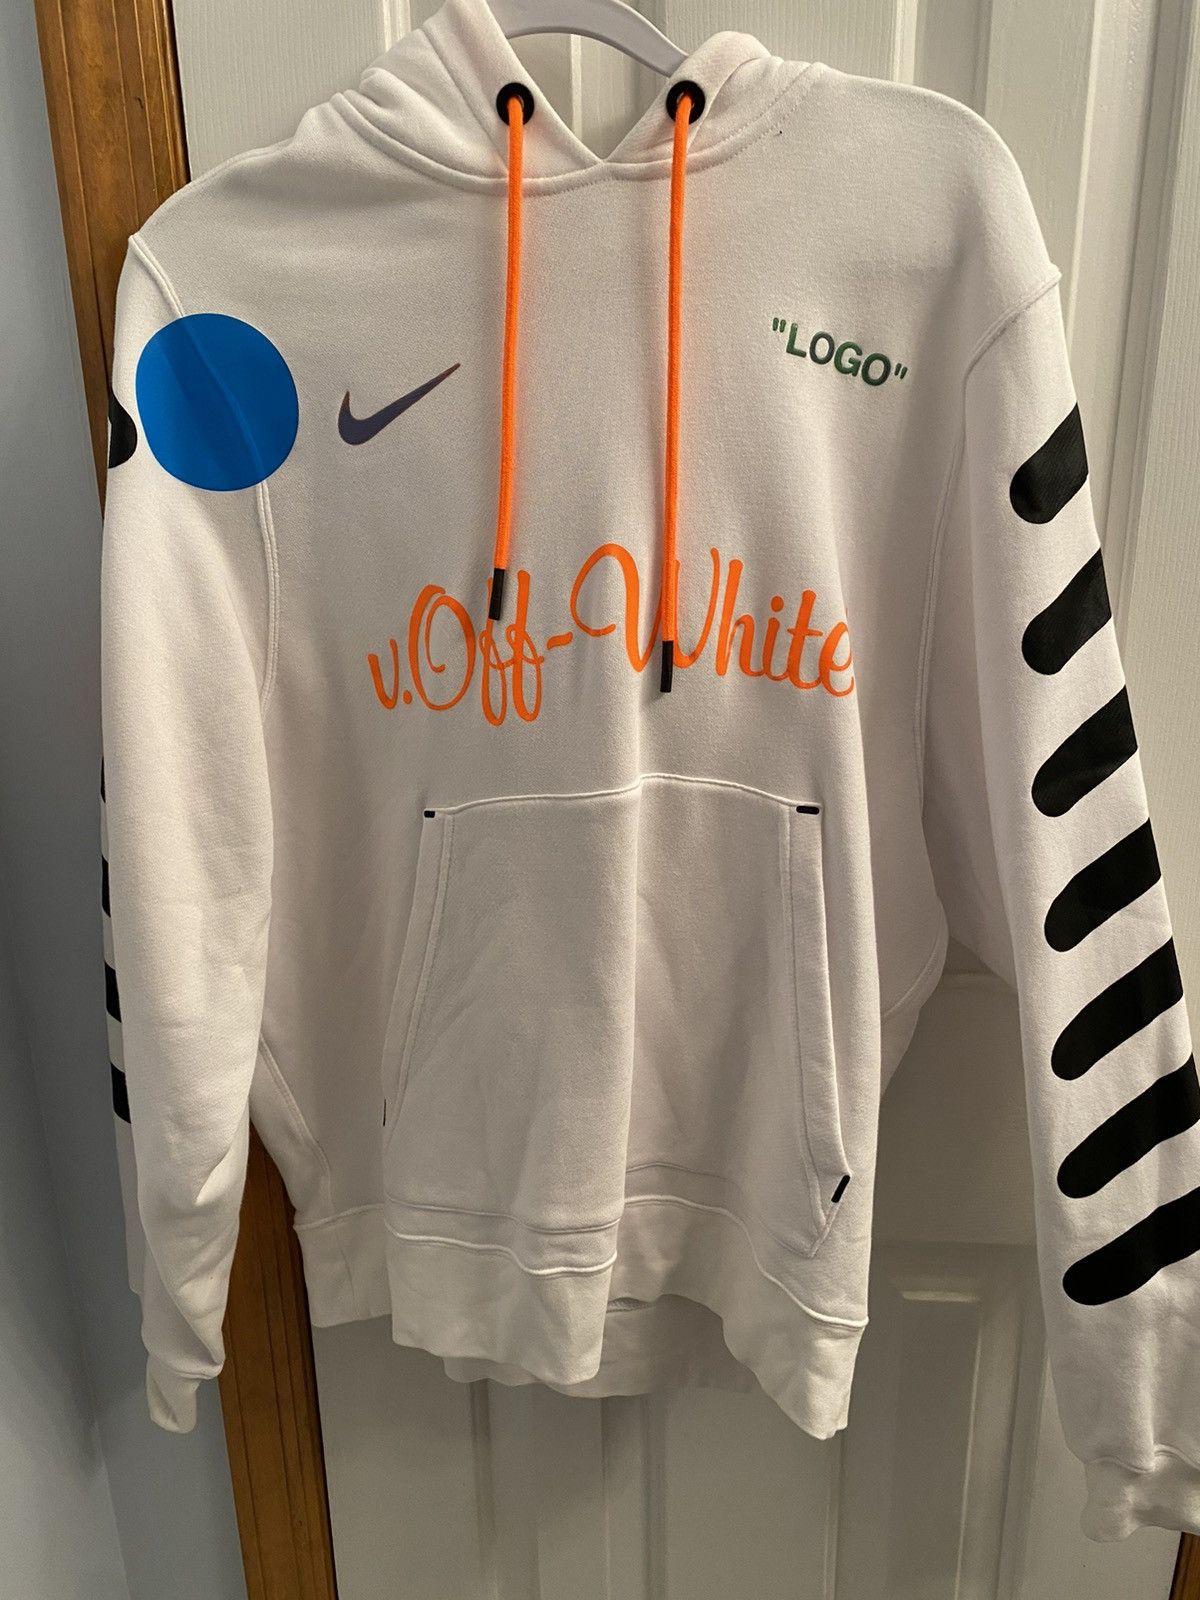 Nike Nike x offwhite mercurial hoodie | Grailed